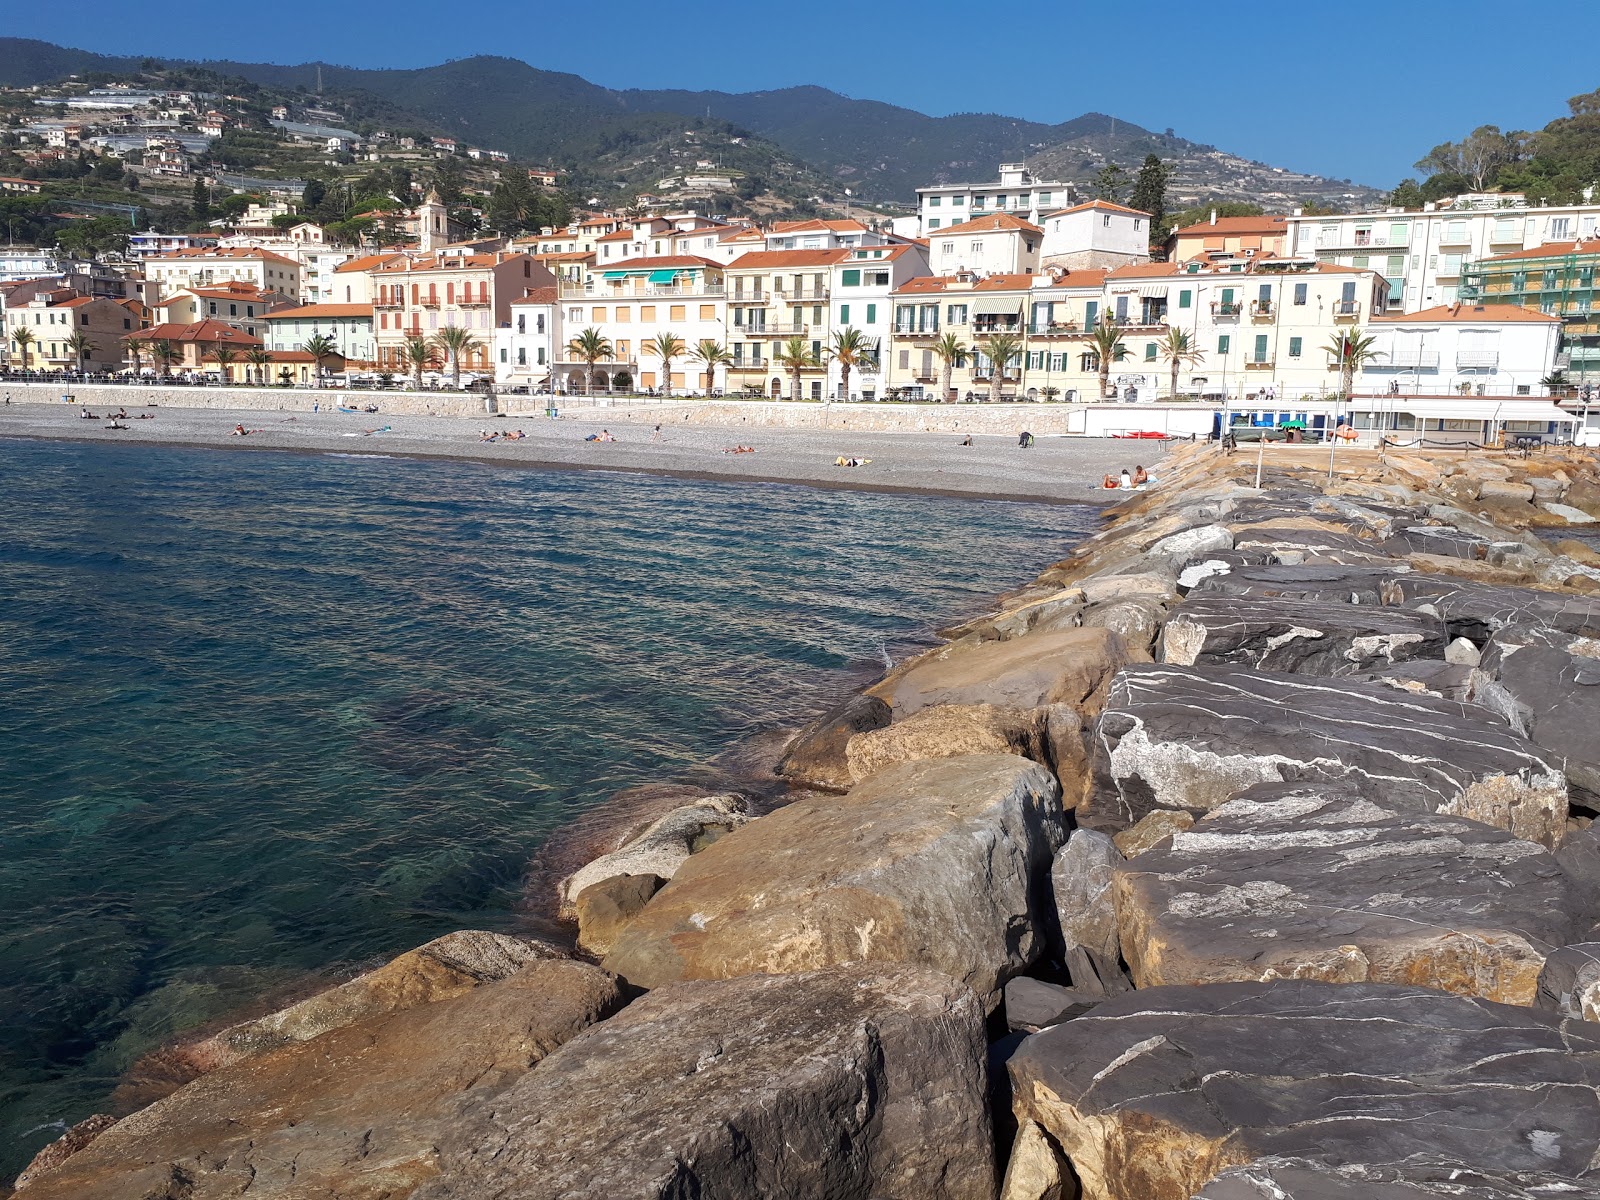 Fotografie cu Bagni La Scogliera beach cu nivelul de curățenie in medie